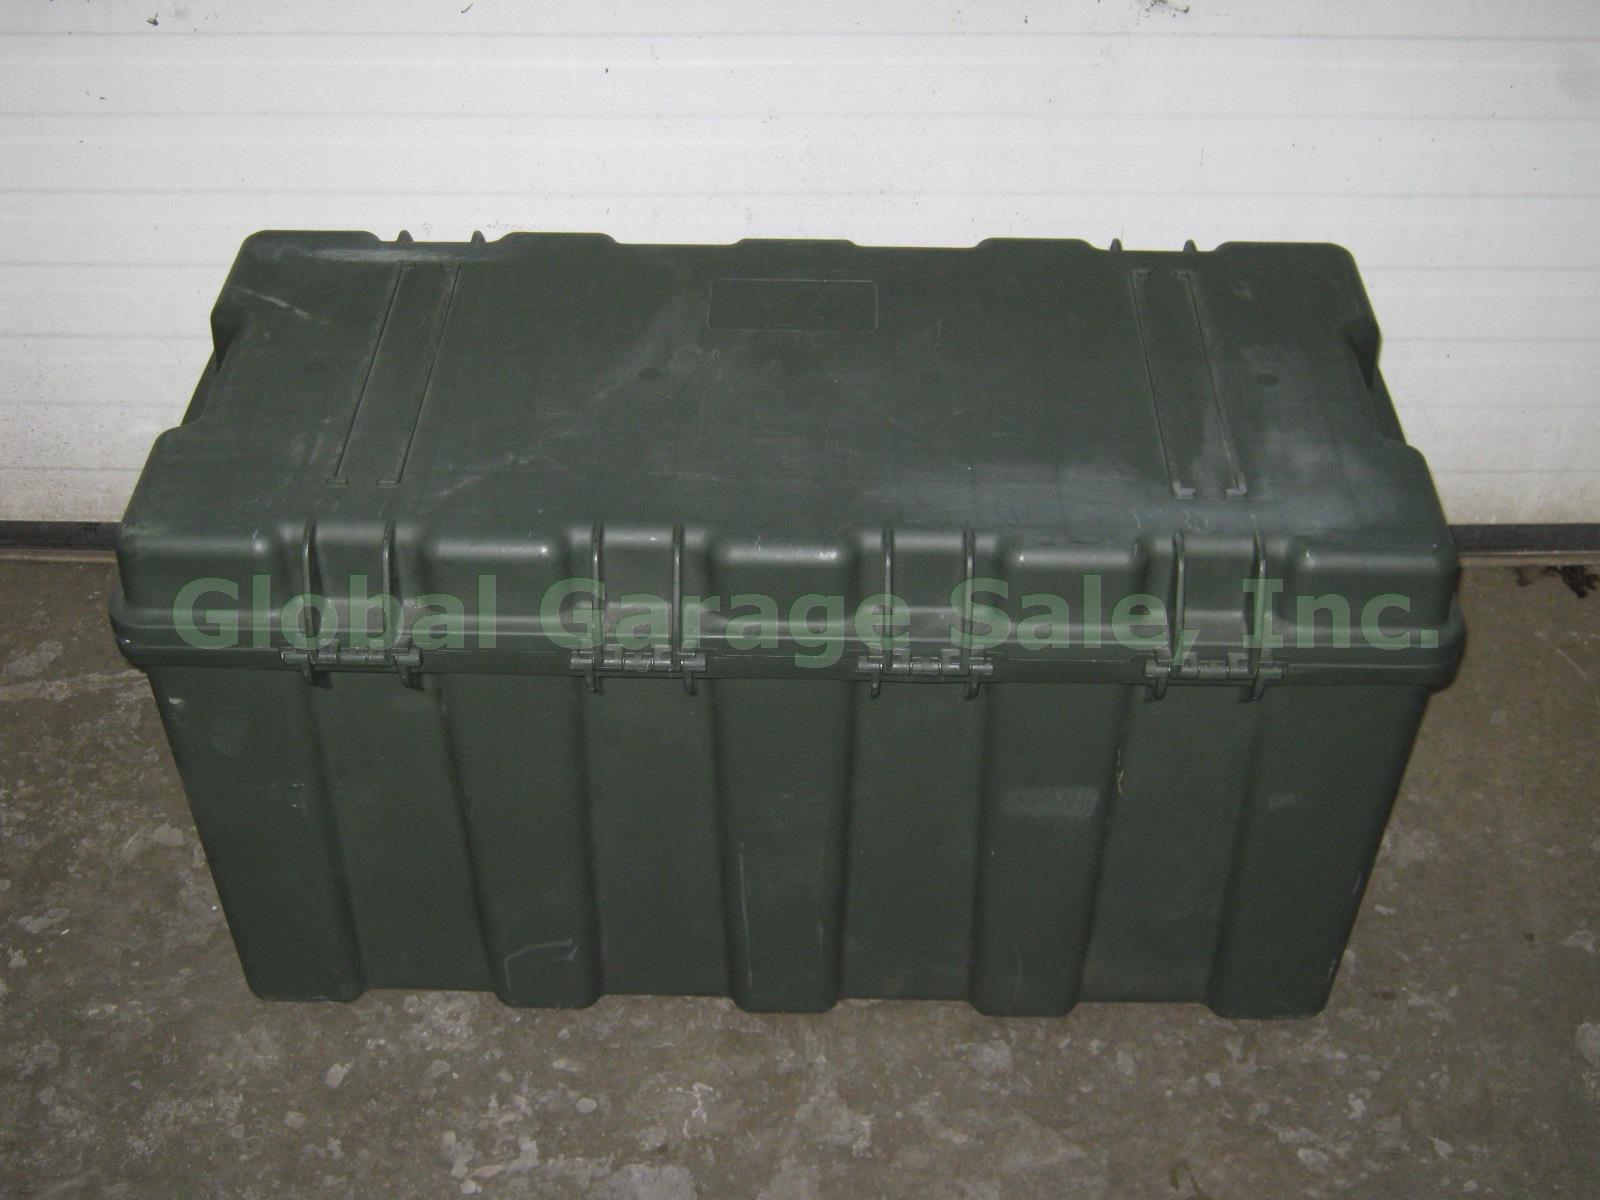 Pelican Hardigg TL 500i Tuff Box Army Military Storage Trunk Green Foot Locker 4